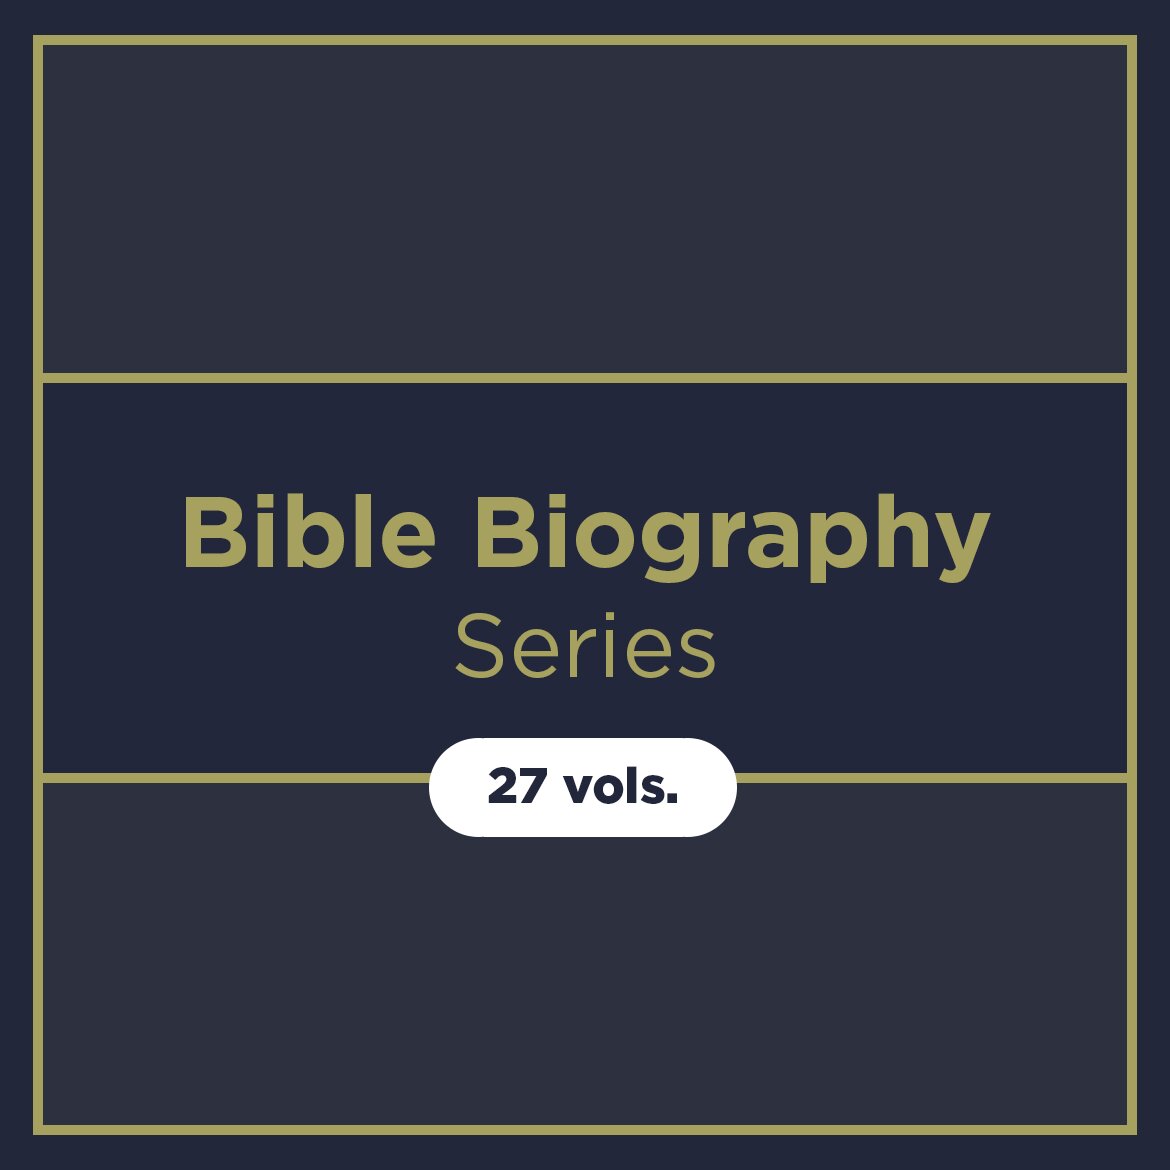 Bible Biography Series (27 vols.)